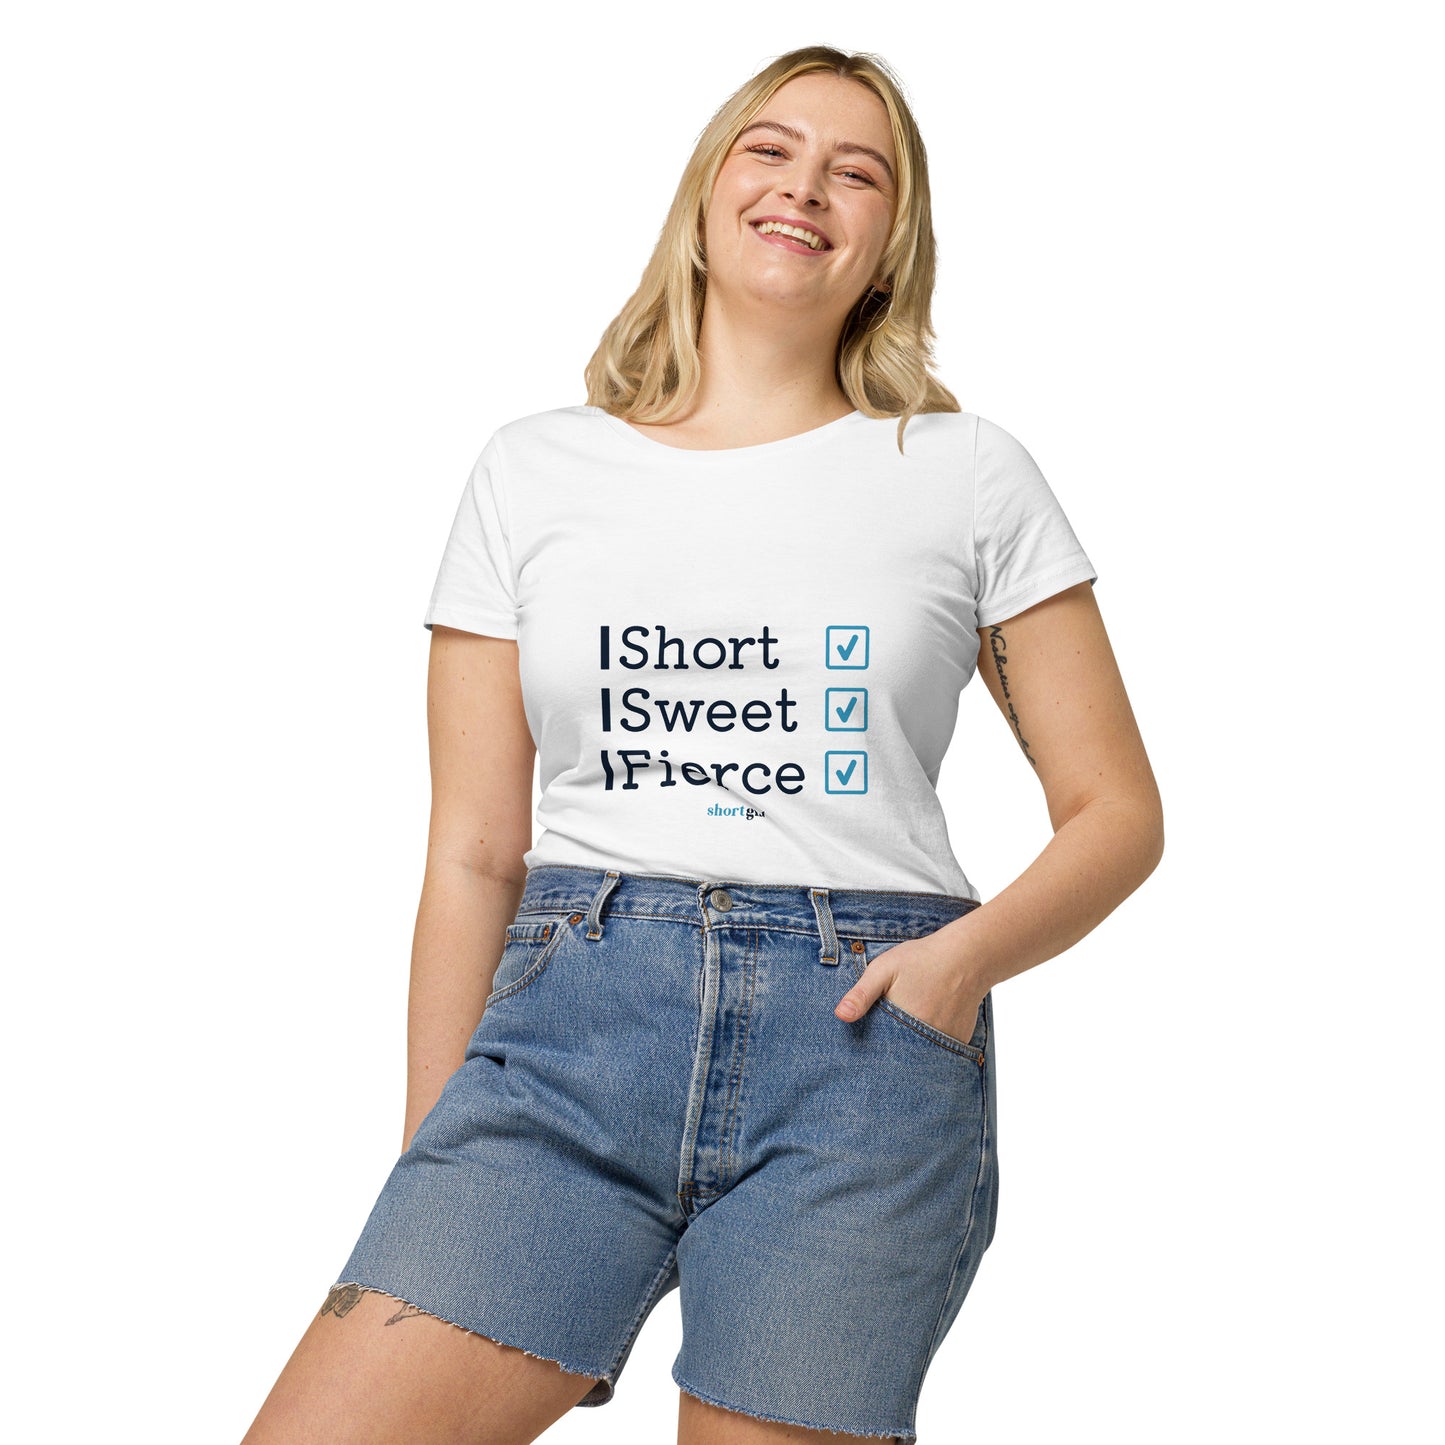 Women’s basic organic t-shirt - Short, Sweet, Fierce